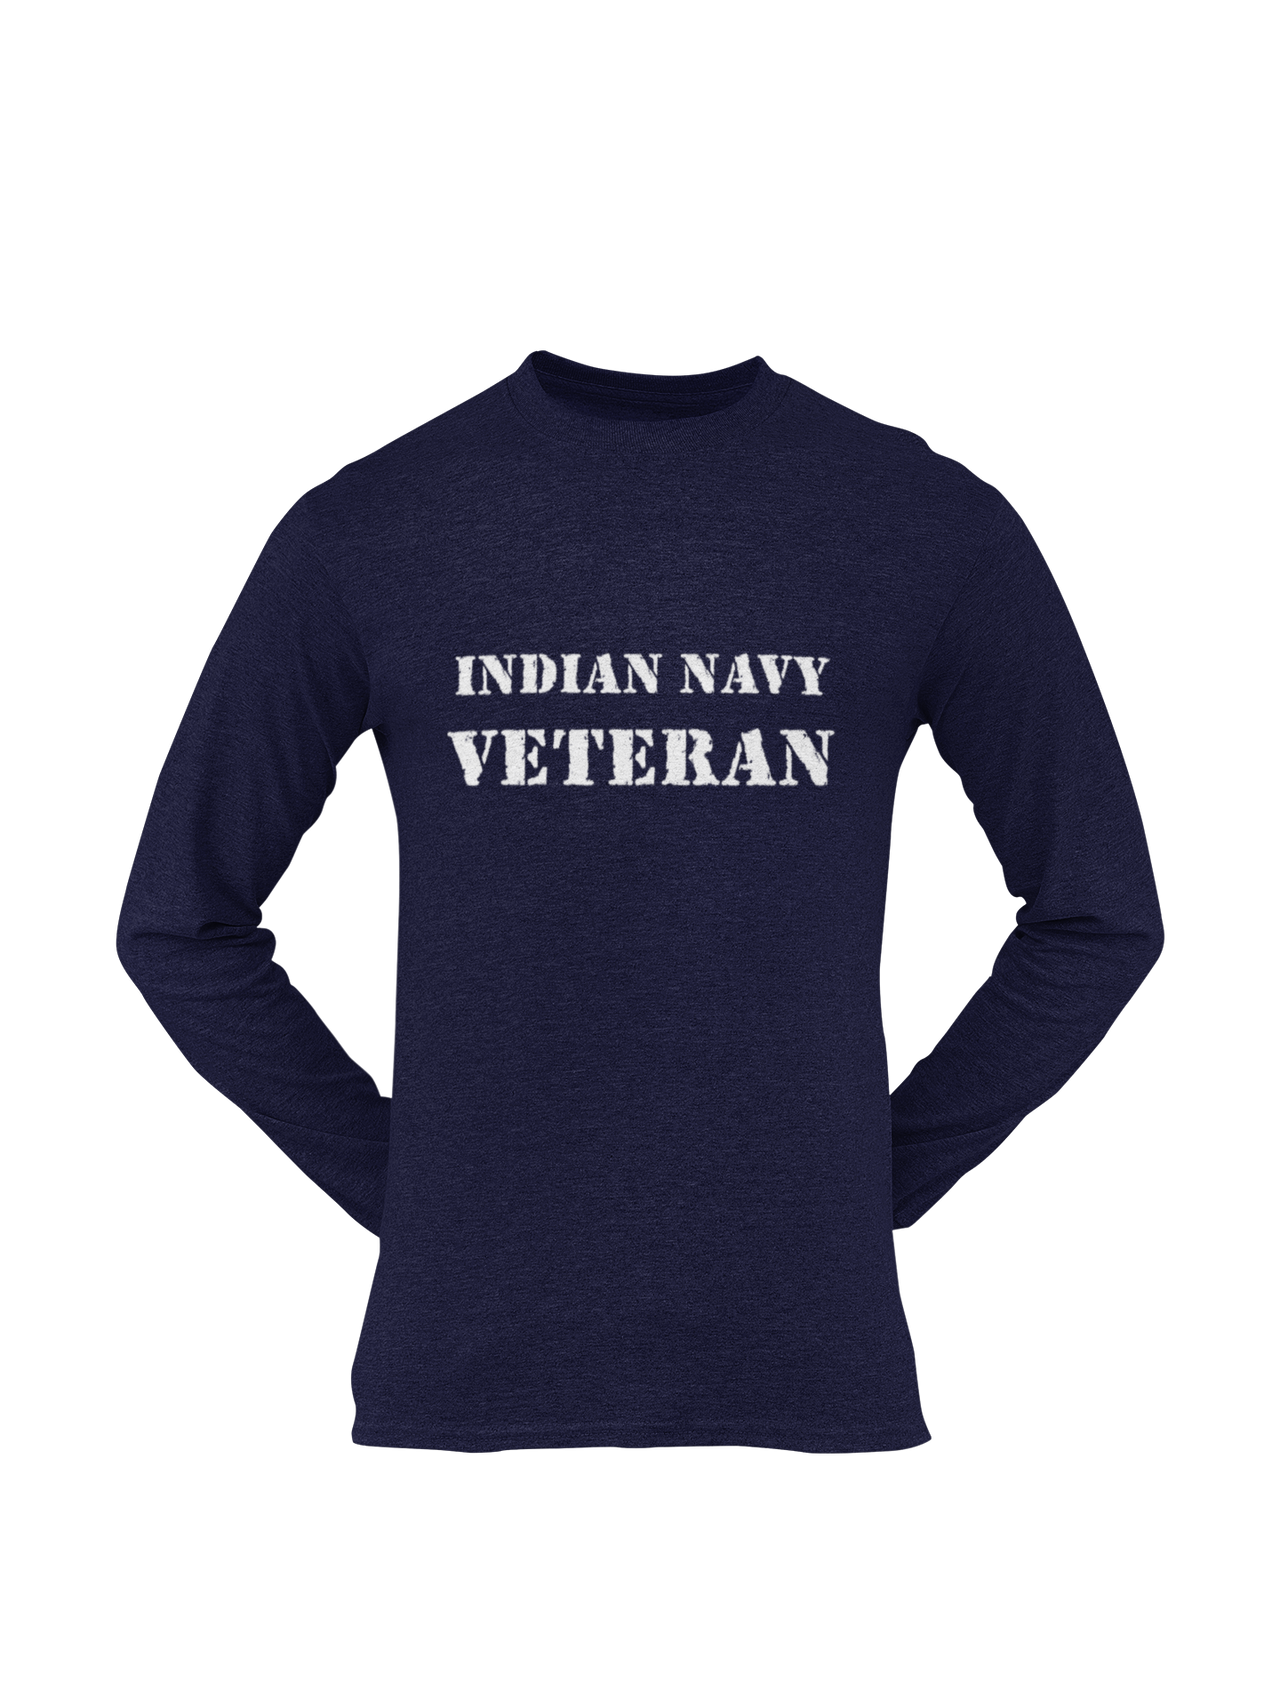 Navy T-shirt - Indian Navy Veteran (Men)